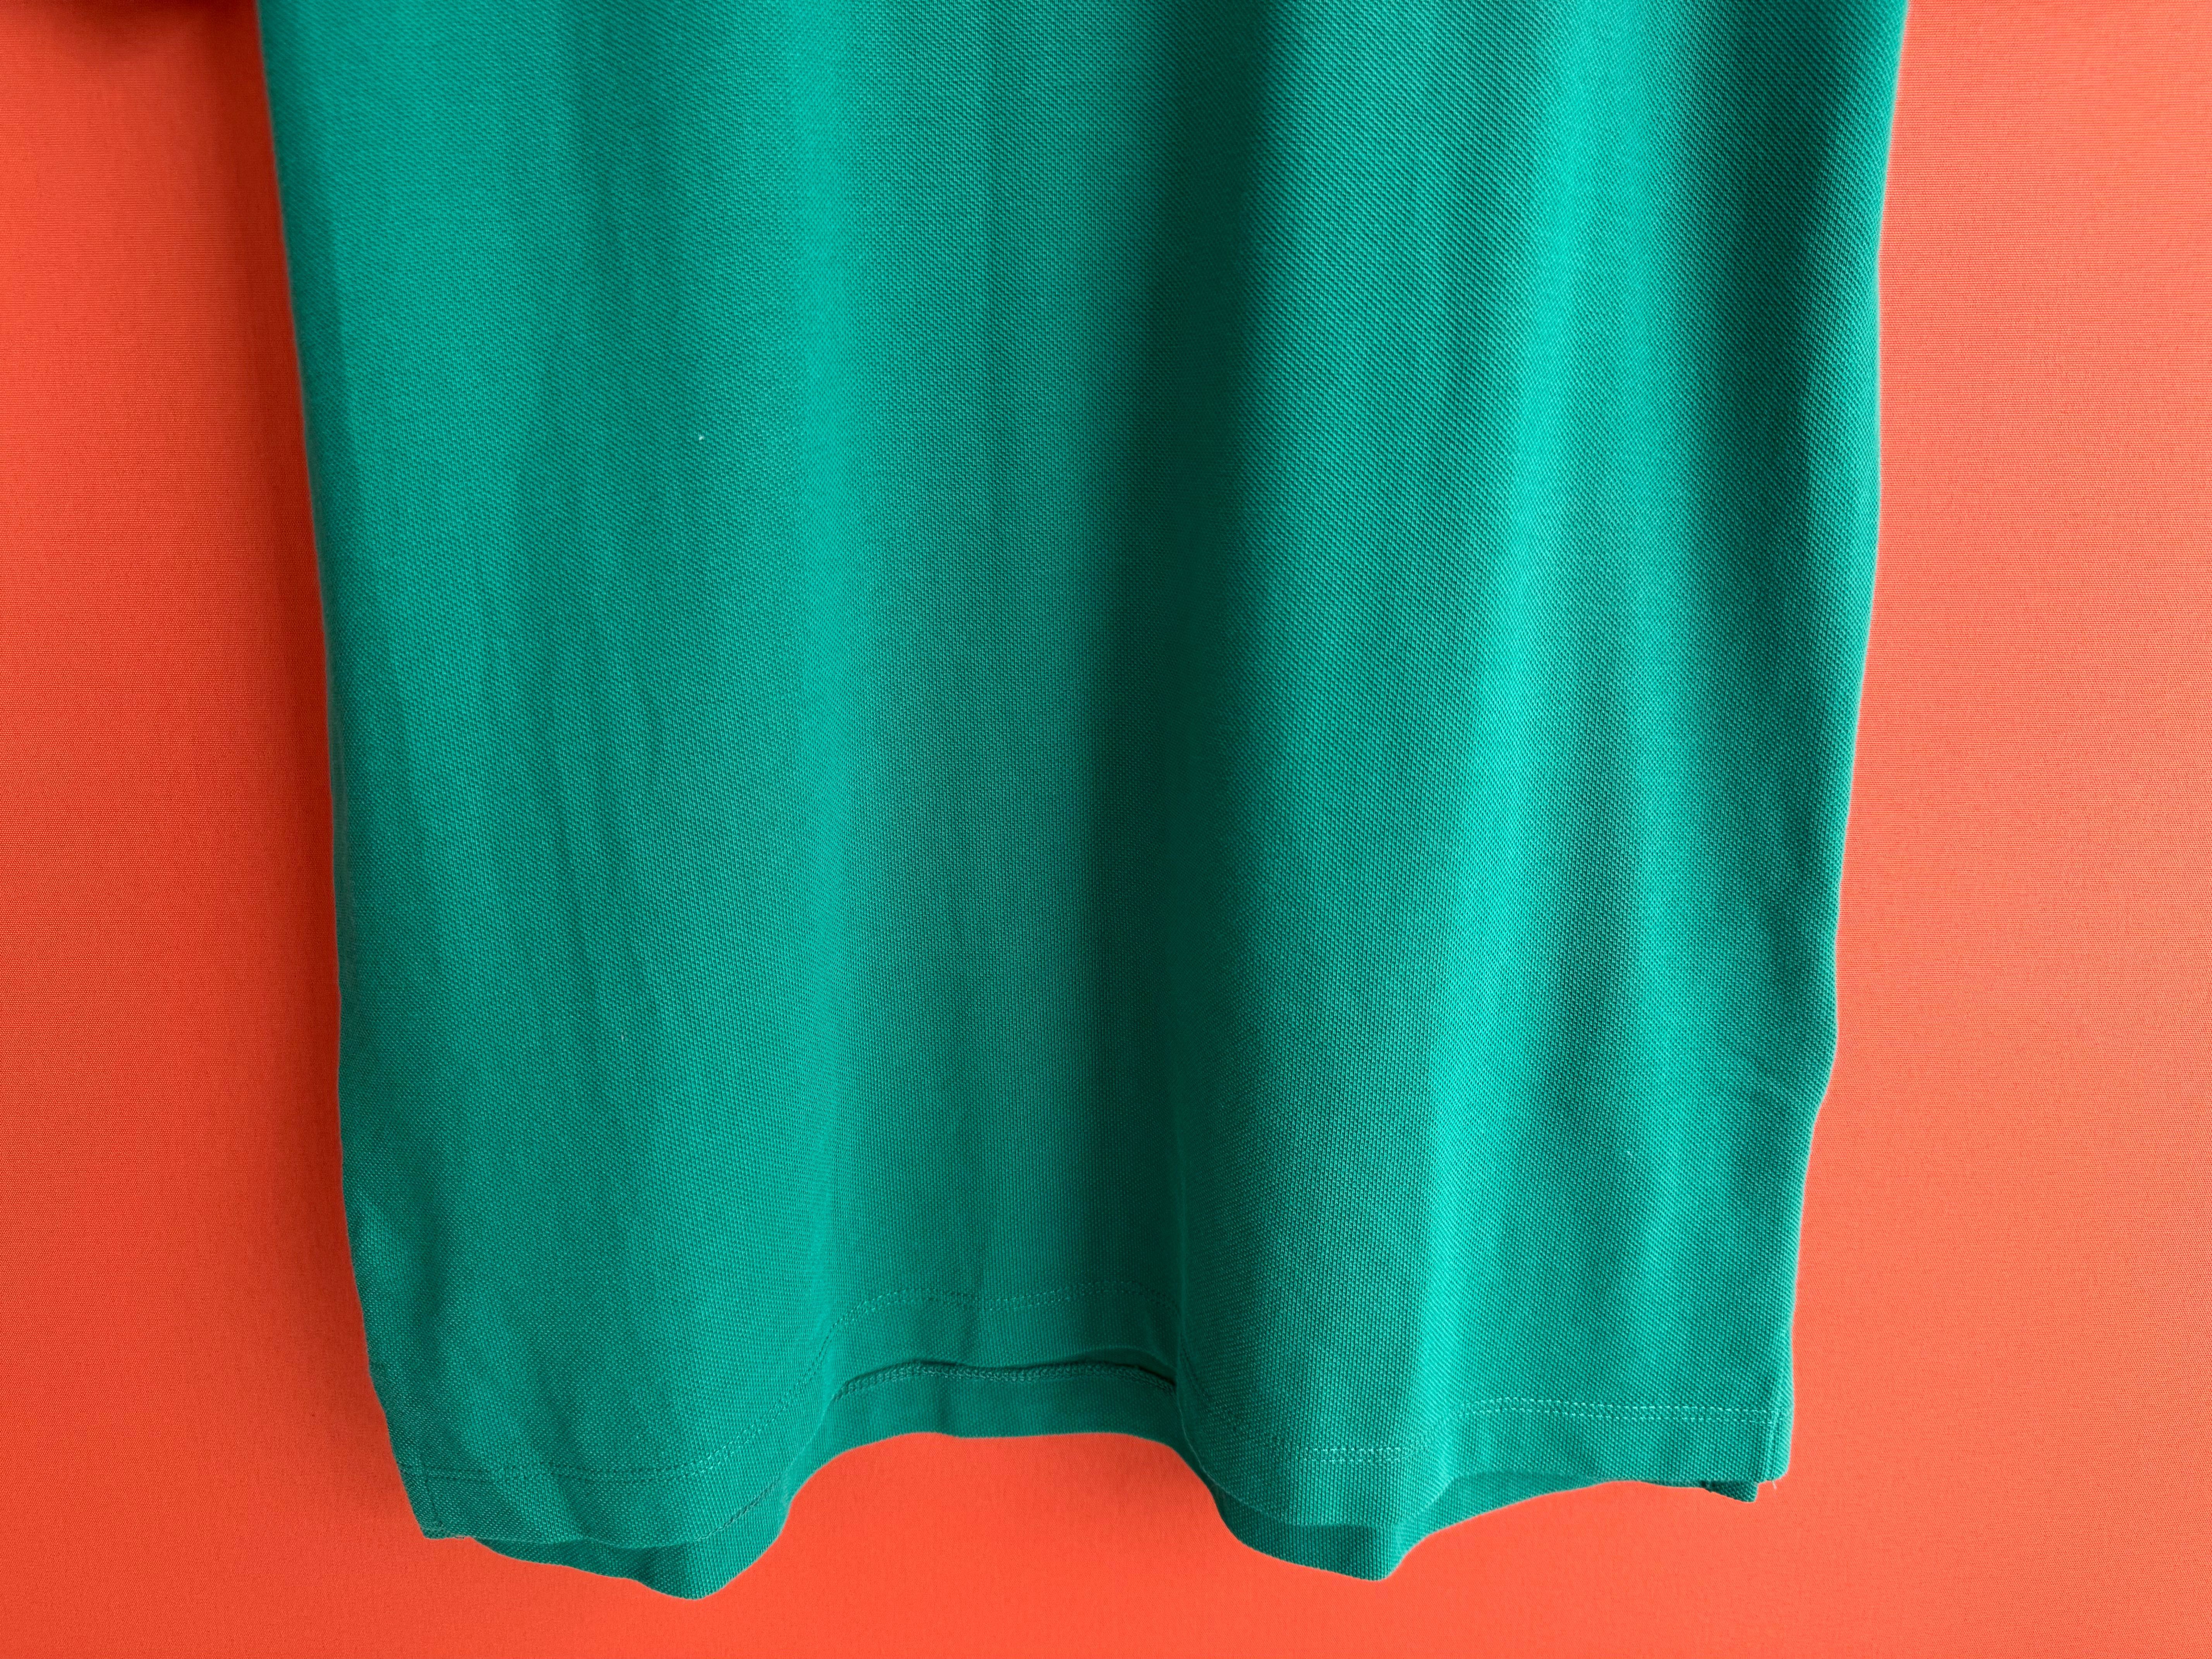 ??? Polo Ralph Lauren мужская футболка с воротником поло размер S M